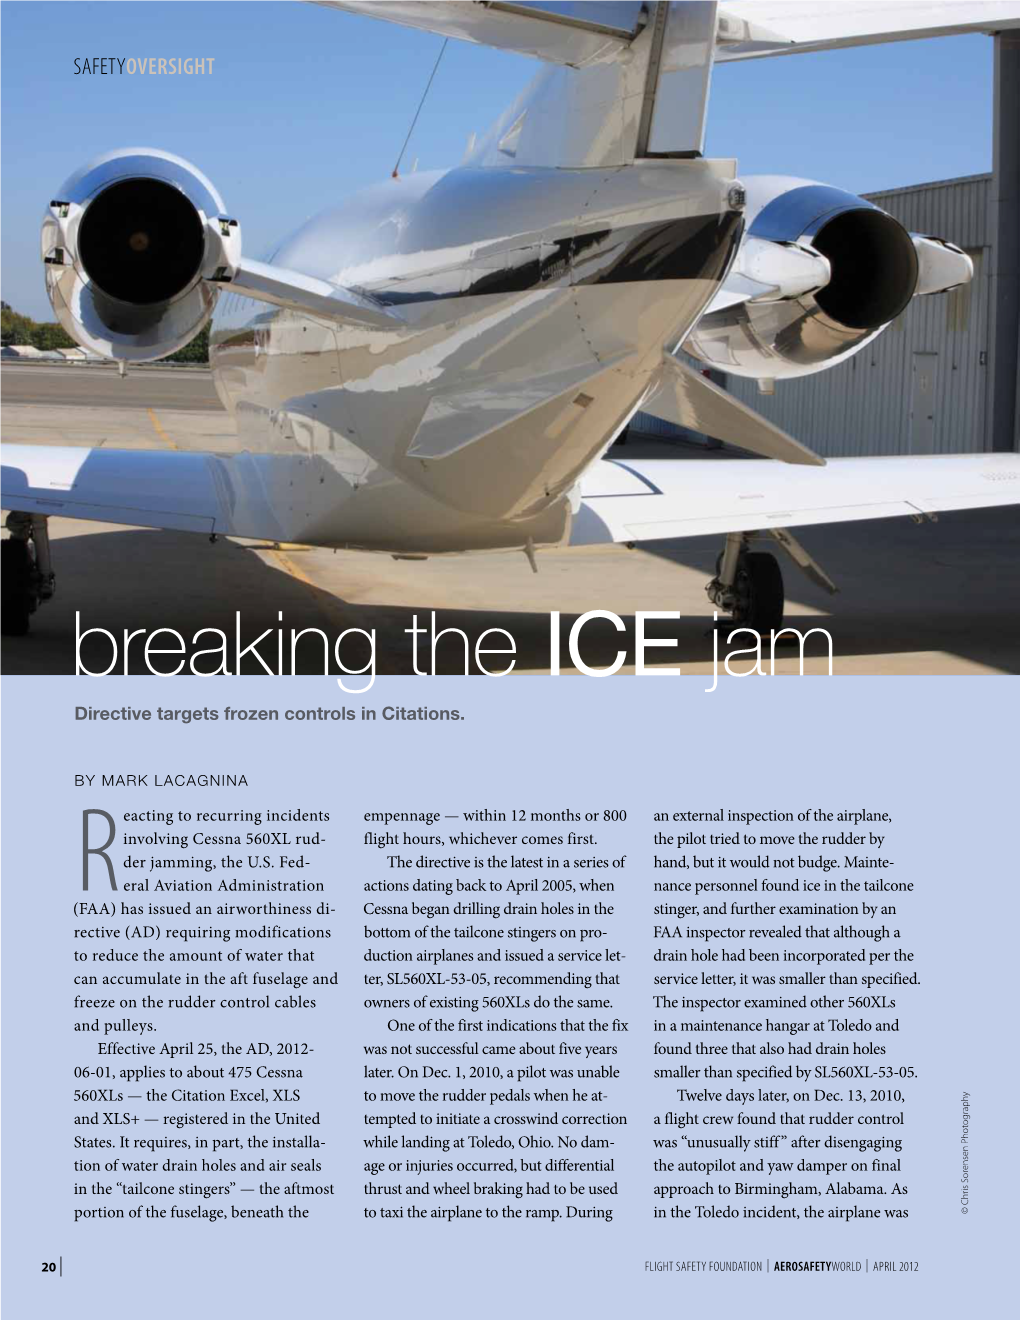 Breaking the ICE Jam Directive Targets Frozen Controls in Citations